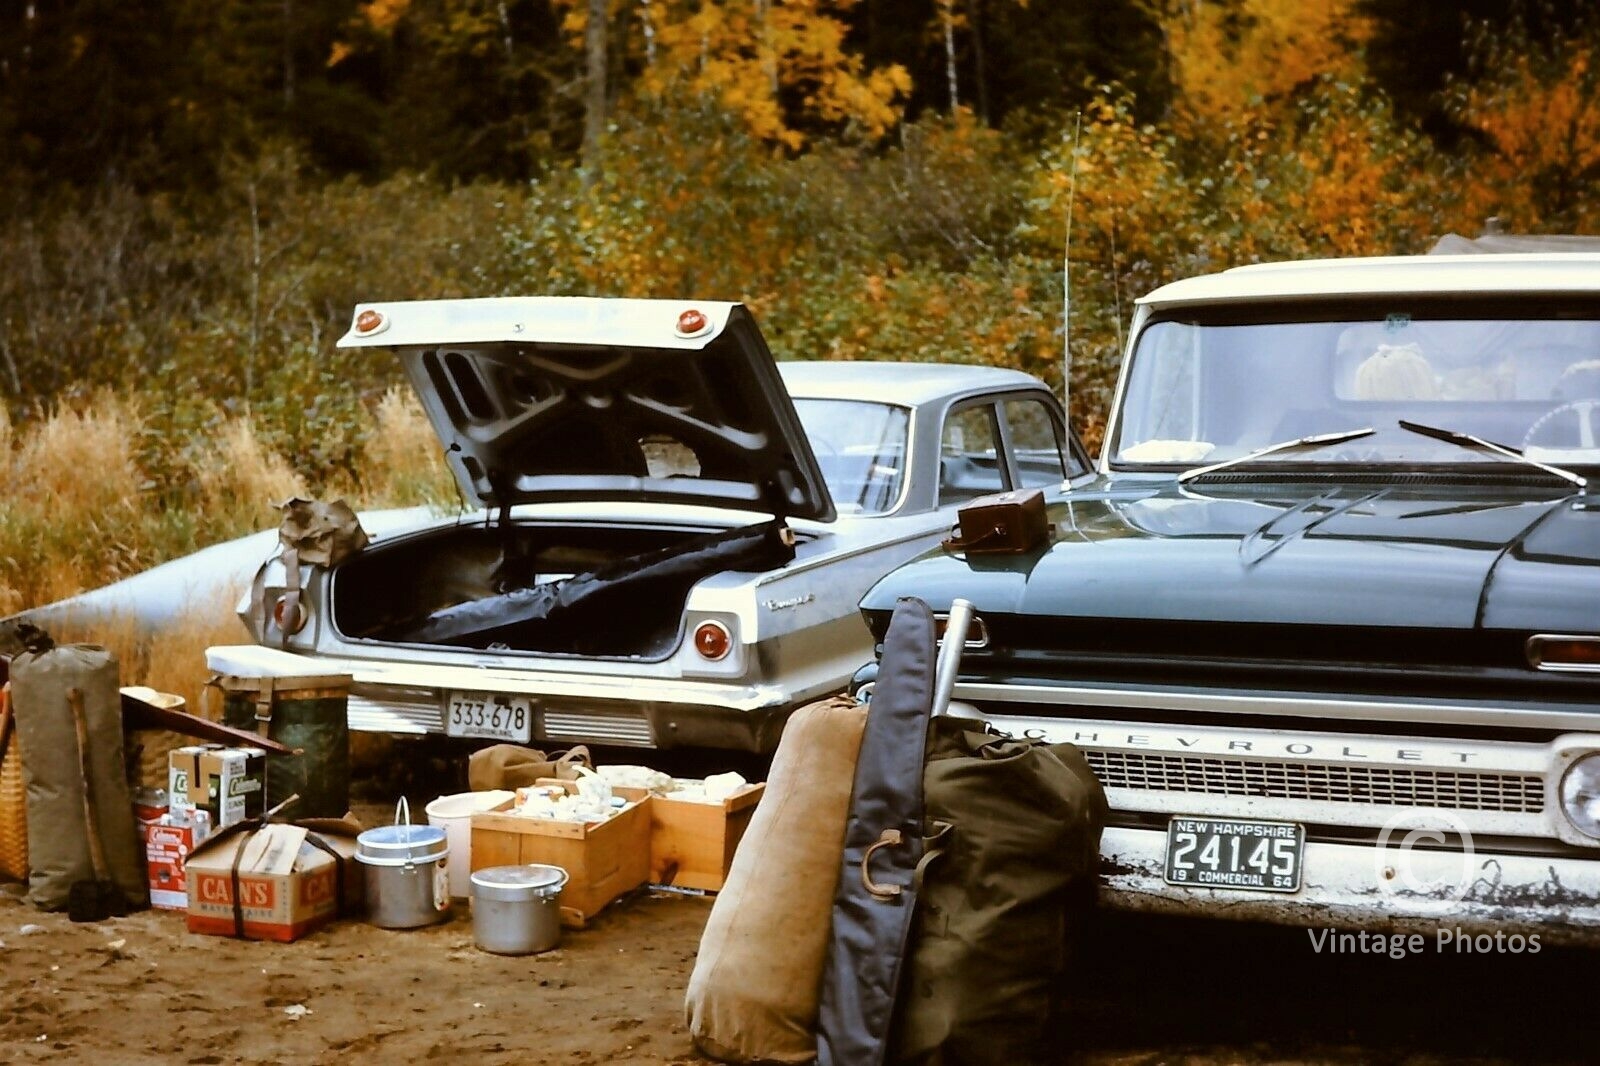 1960s Classic Truck & Car Unloading Camping Equipment